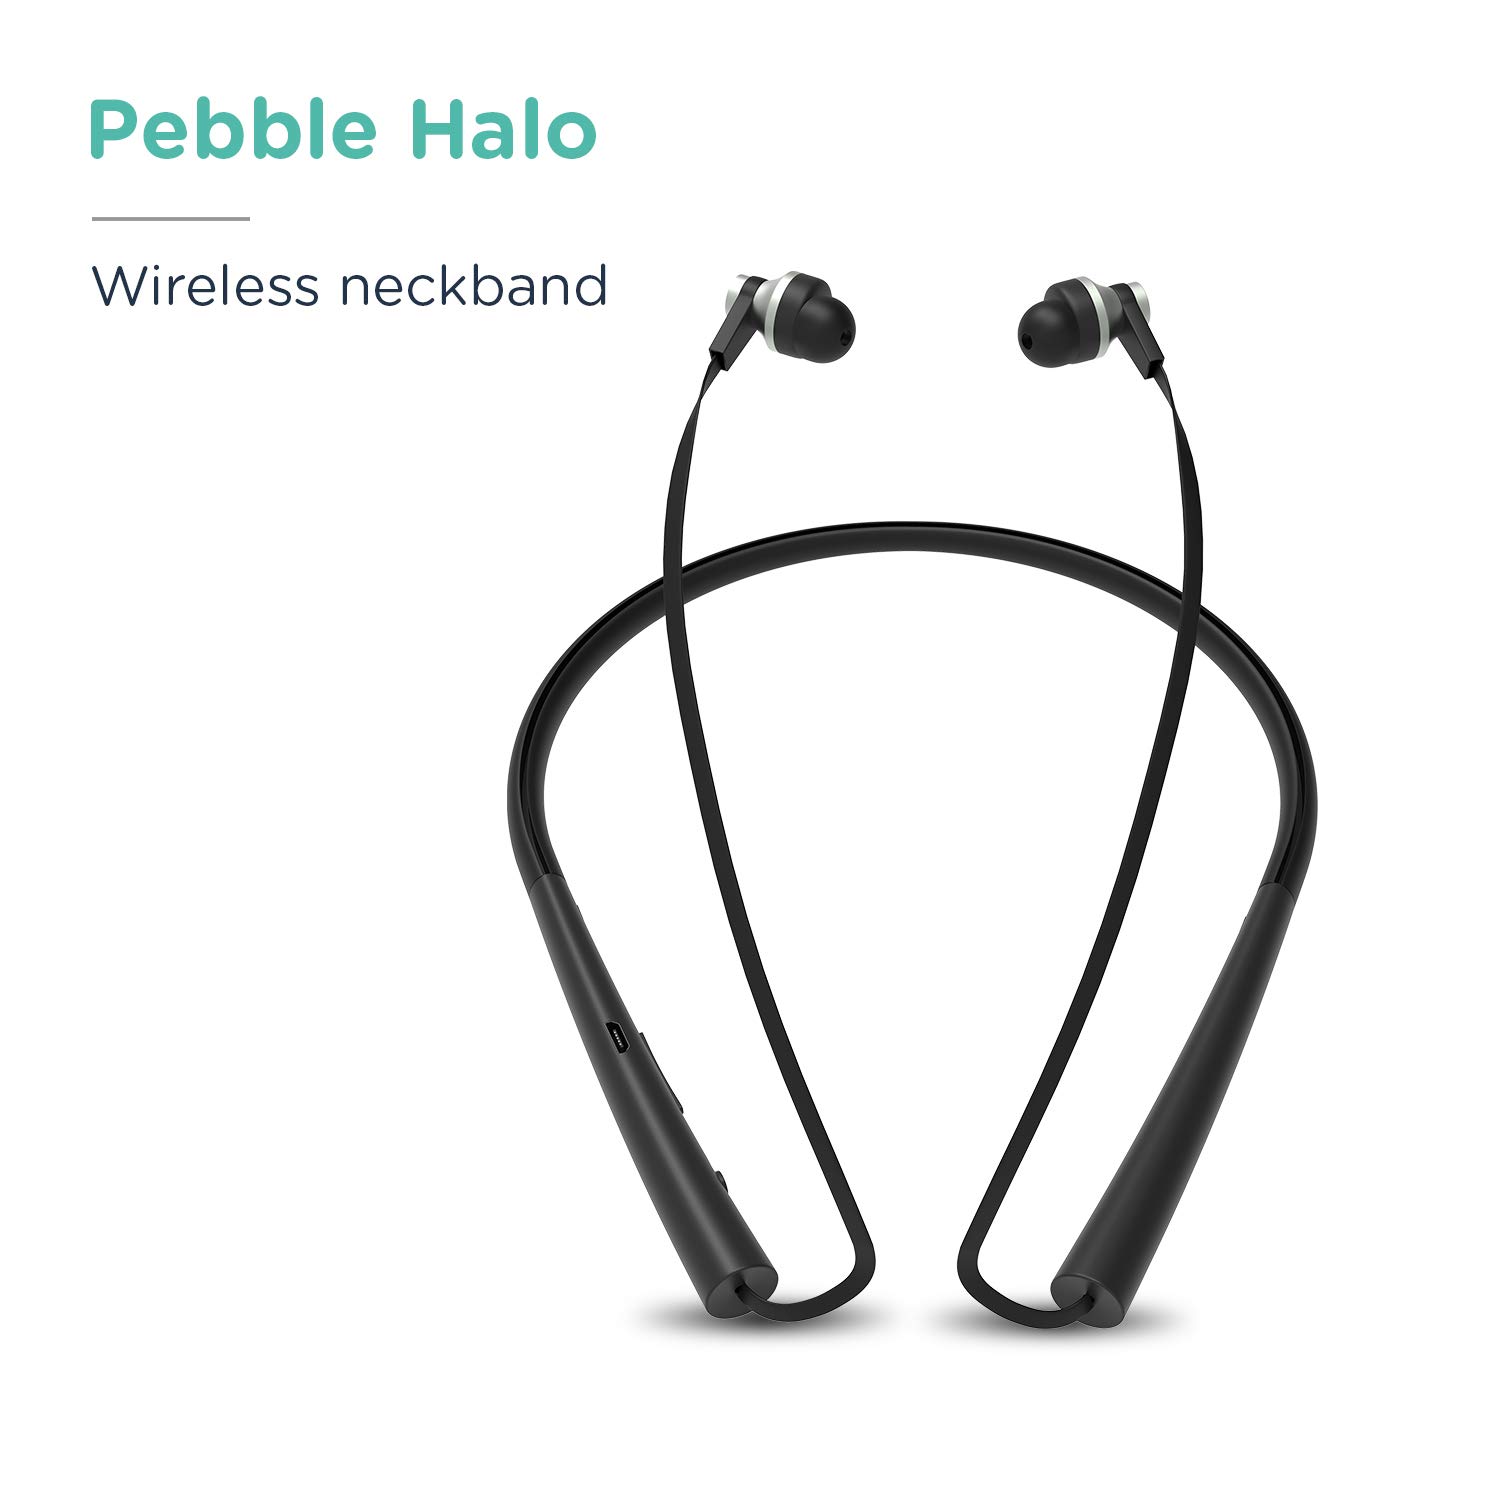 Pebble Halo Wireless Bluetooth Neckband with Deep bass Sound